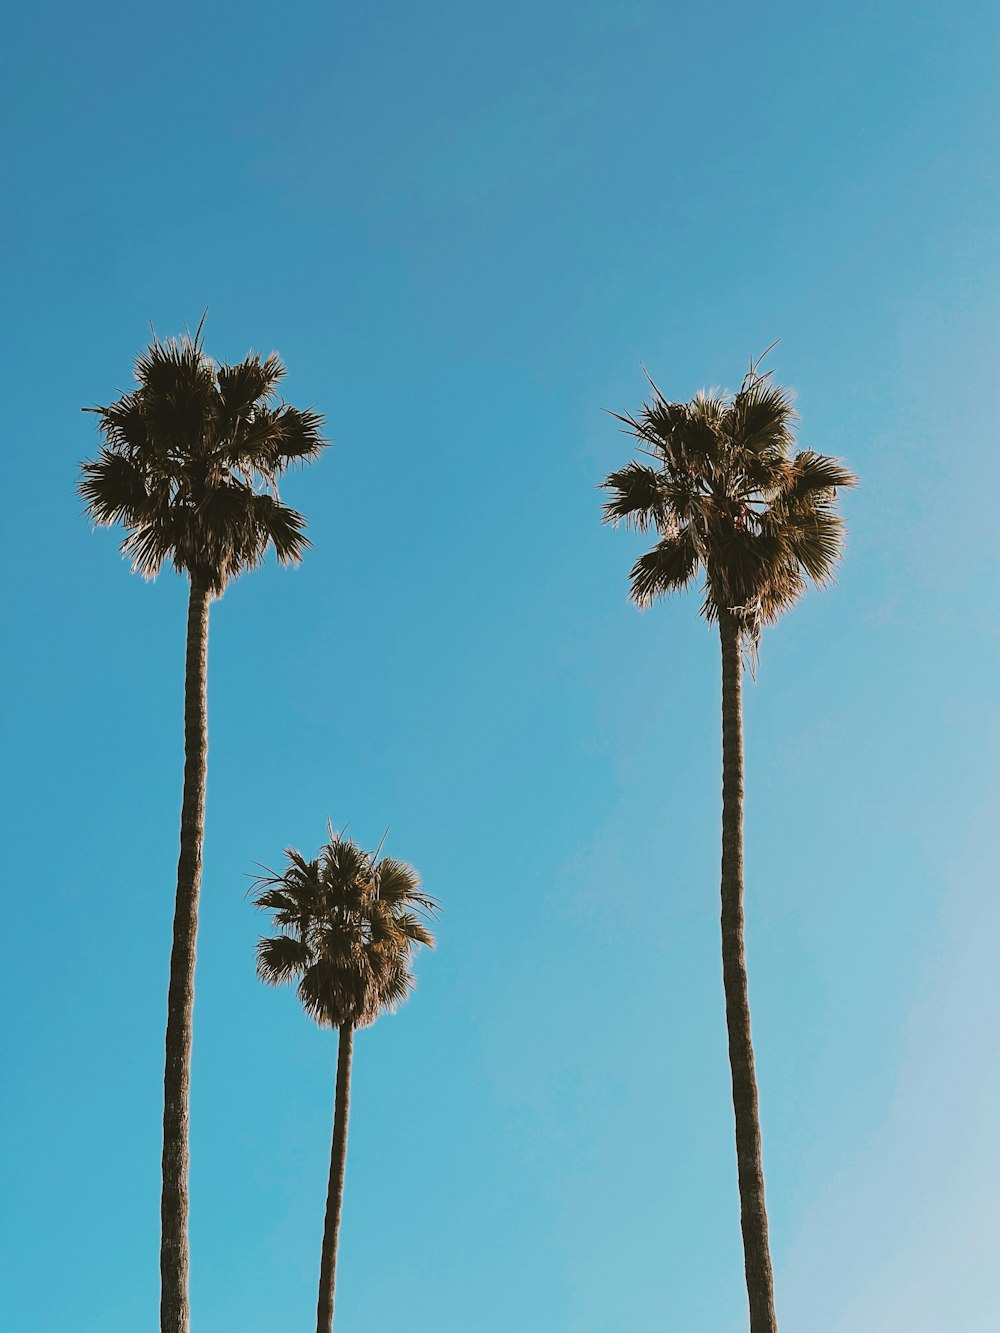 three tall palm trees against a blue sky